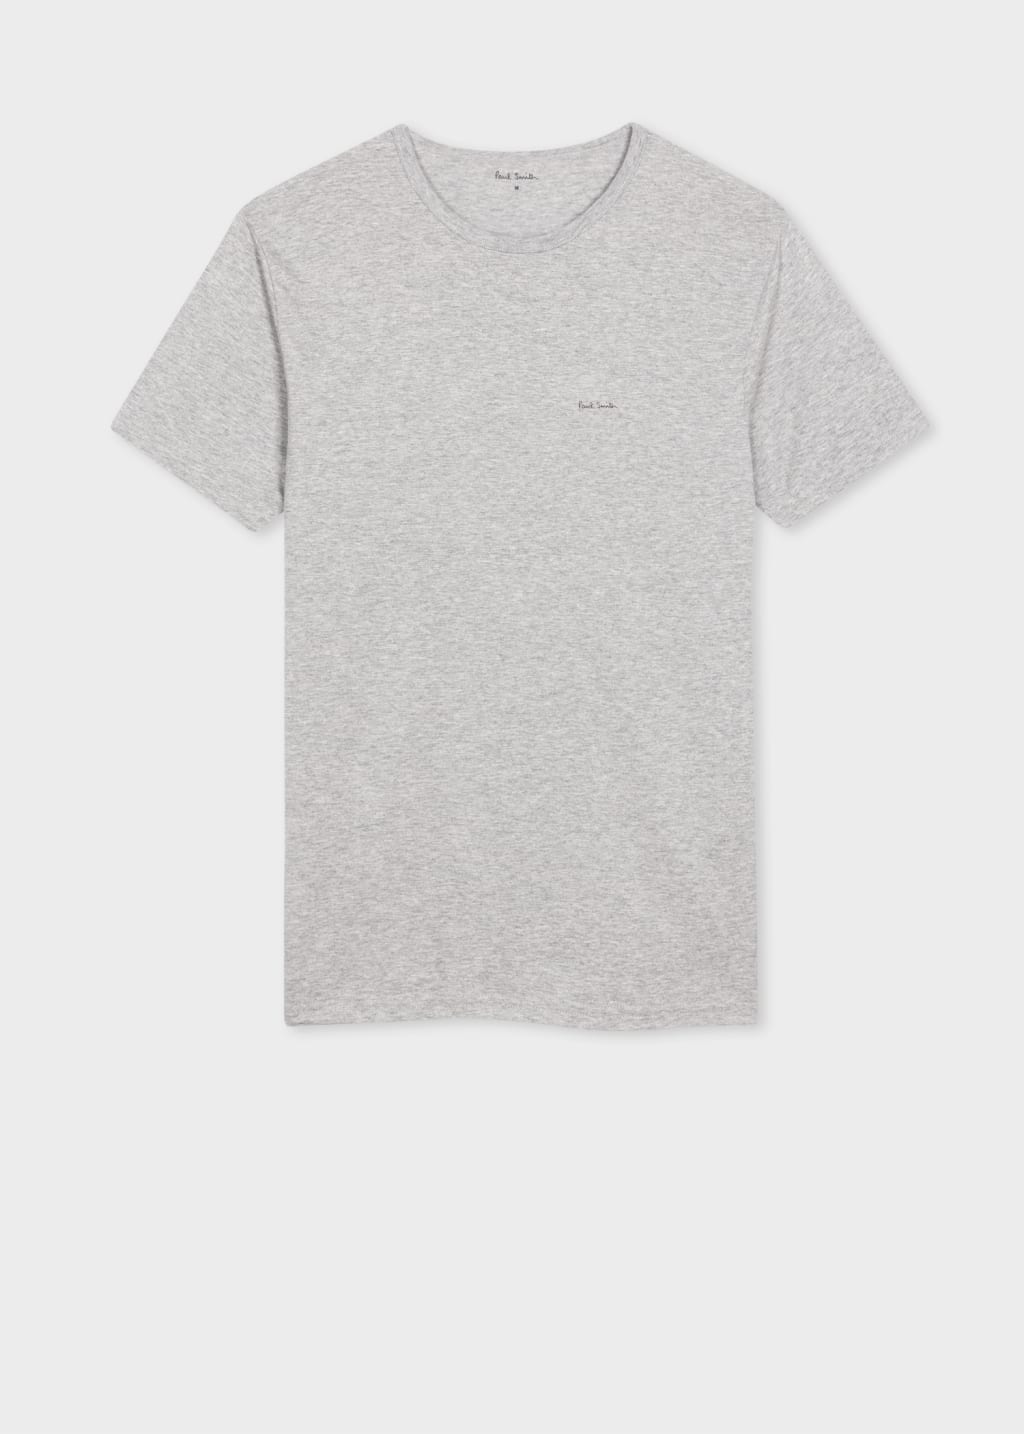 Men's Mixed Colour Cotton Logo Lounge T-Shirts Three Pack